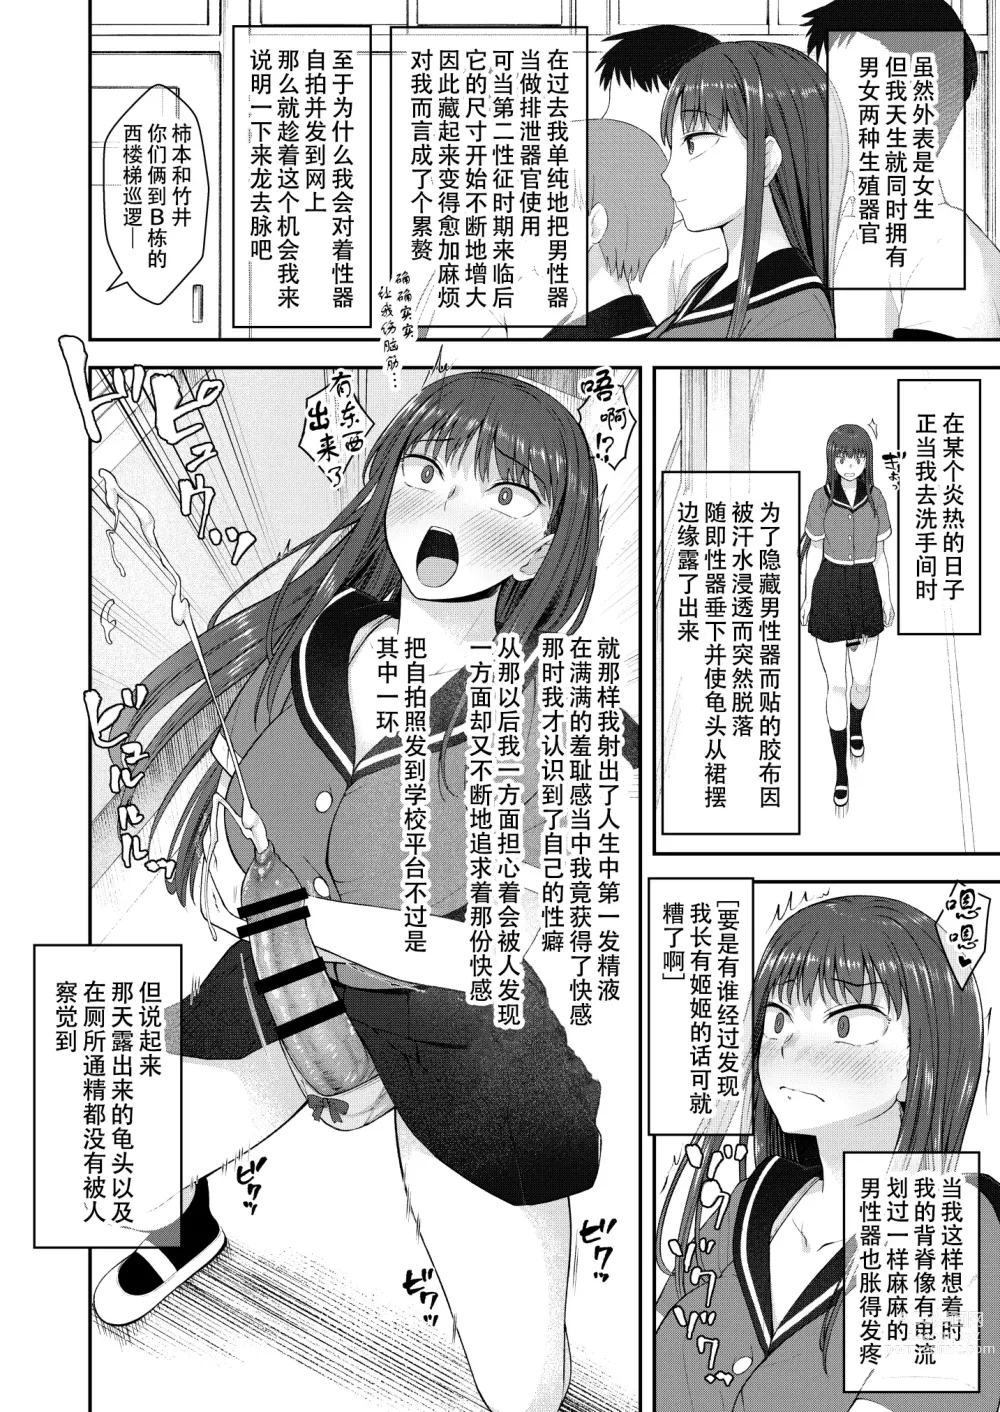 Page 4 of doujinshi 放课后的自拍少女2 那个露出男性性器并且自拍的变态只有她知道其真面目.